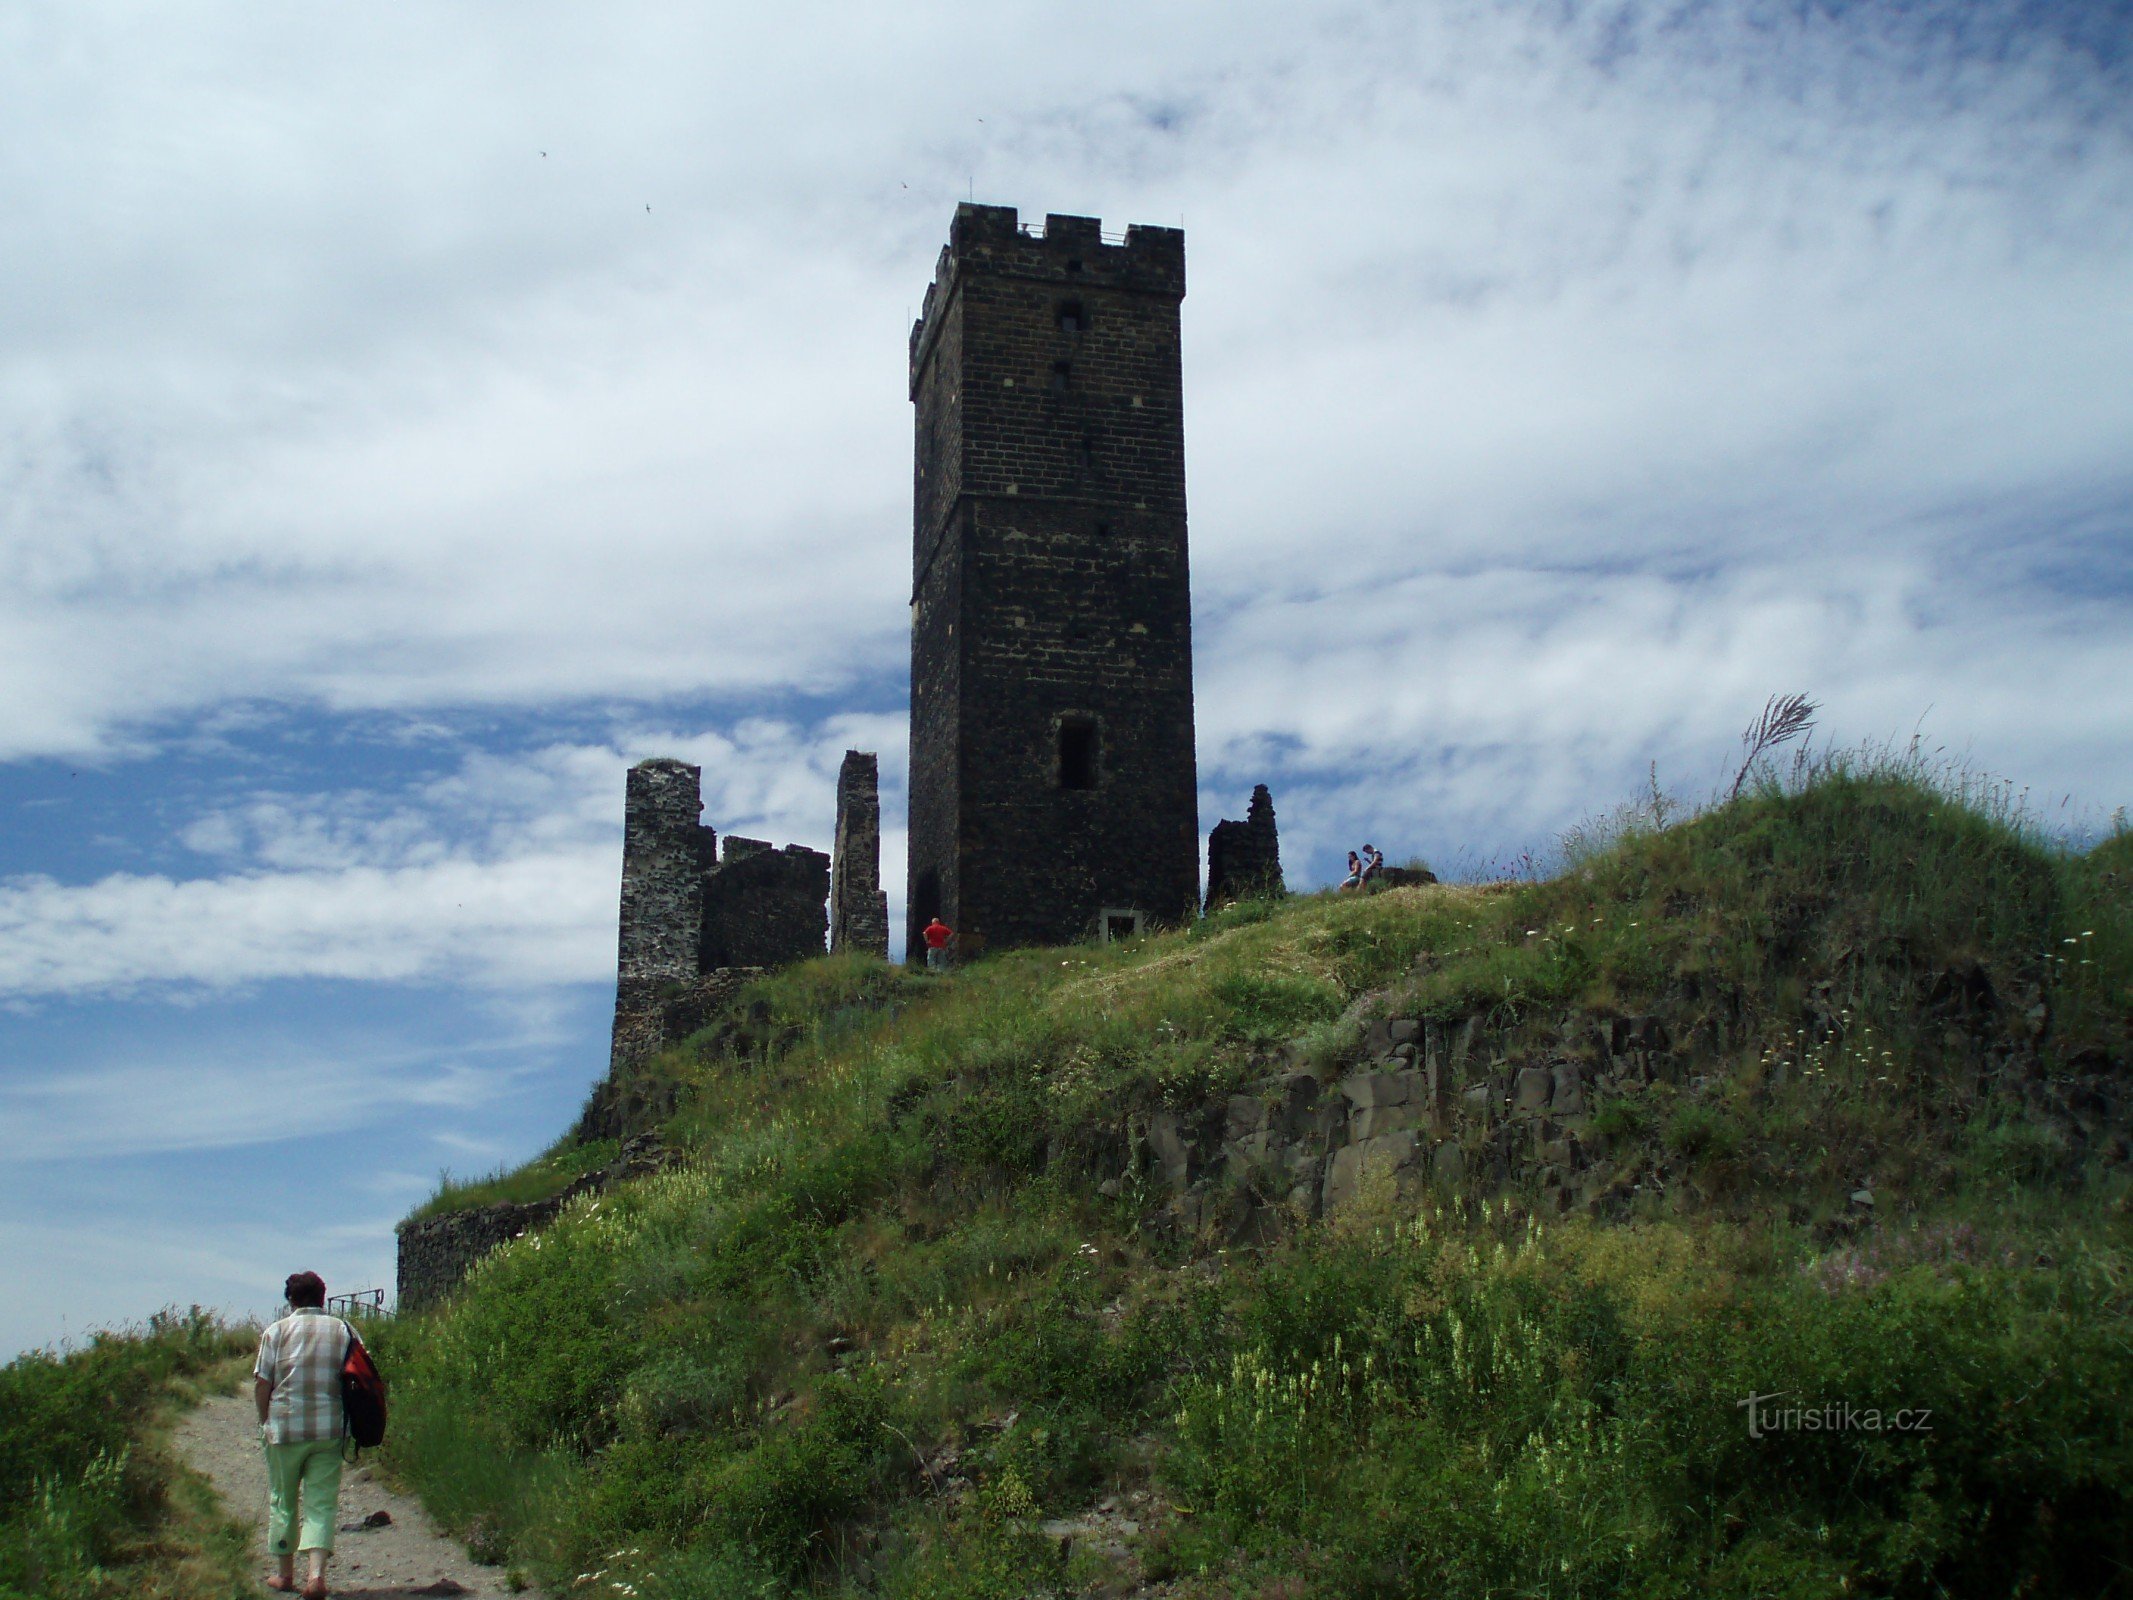 Házmburk slott - Vita tornet